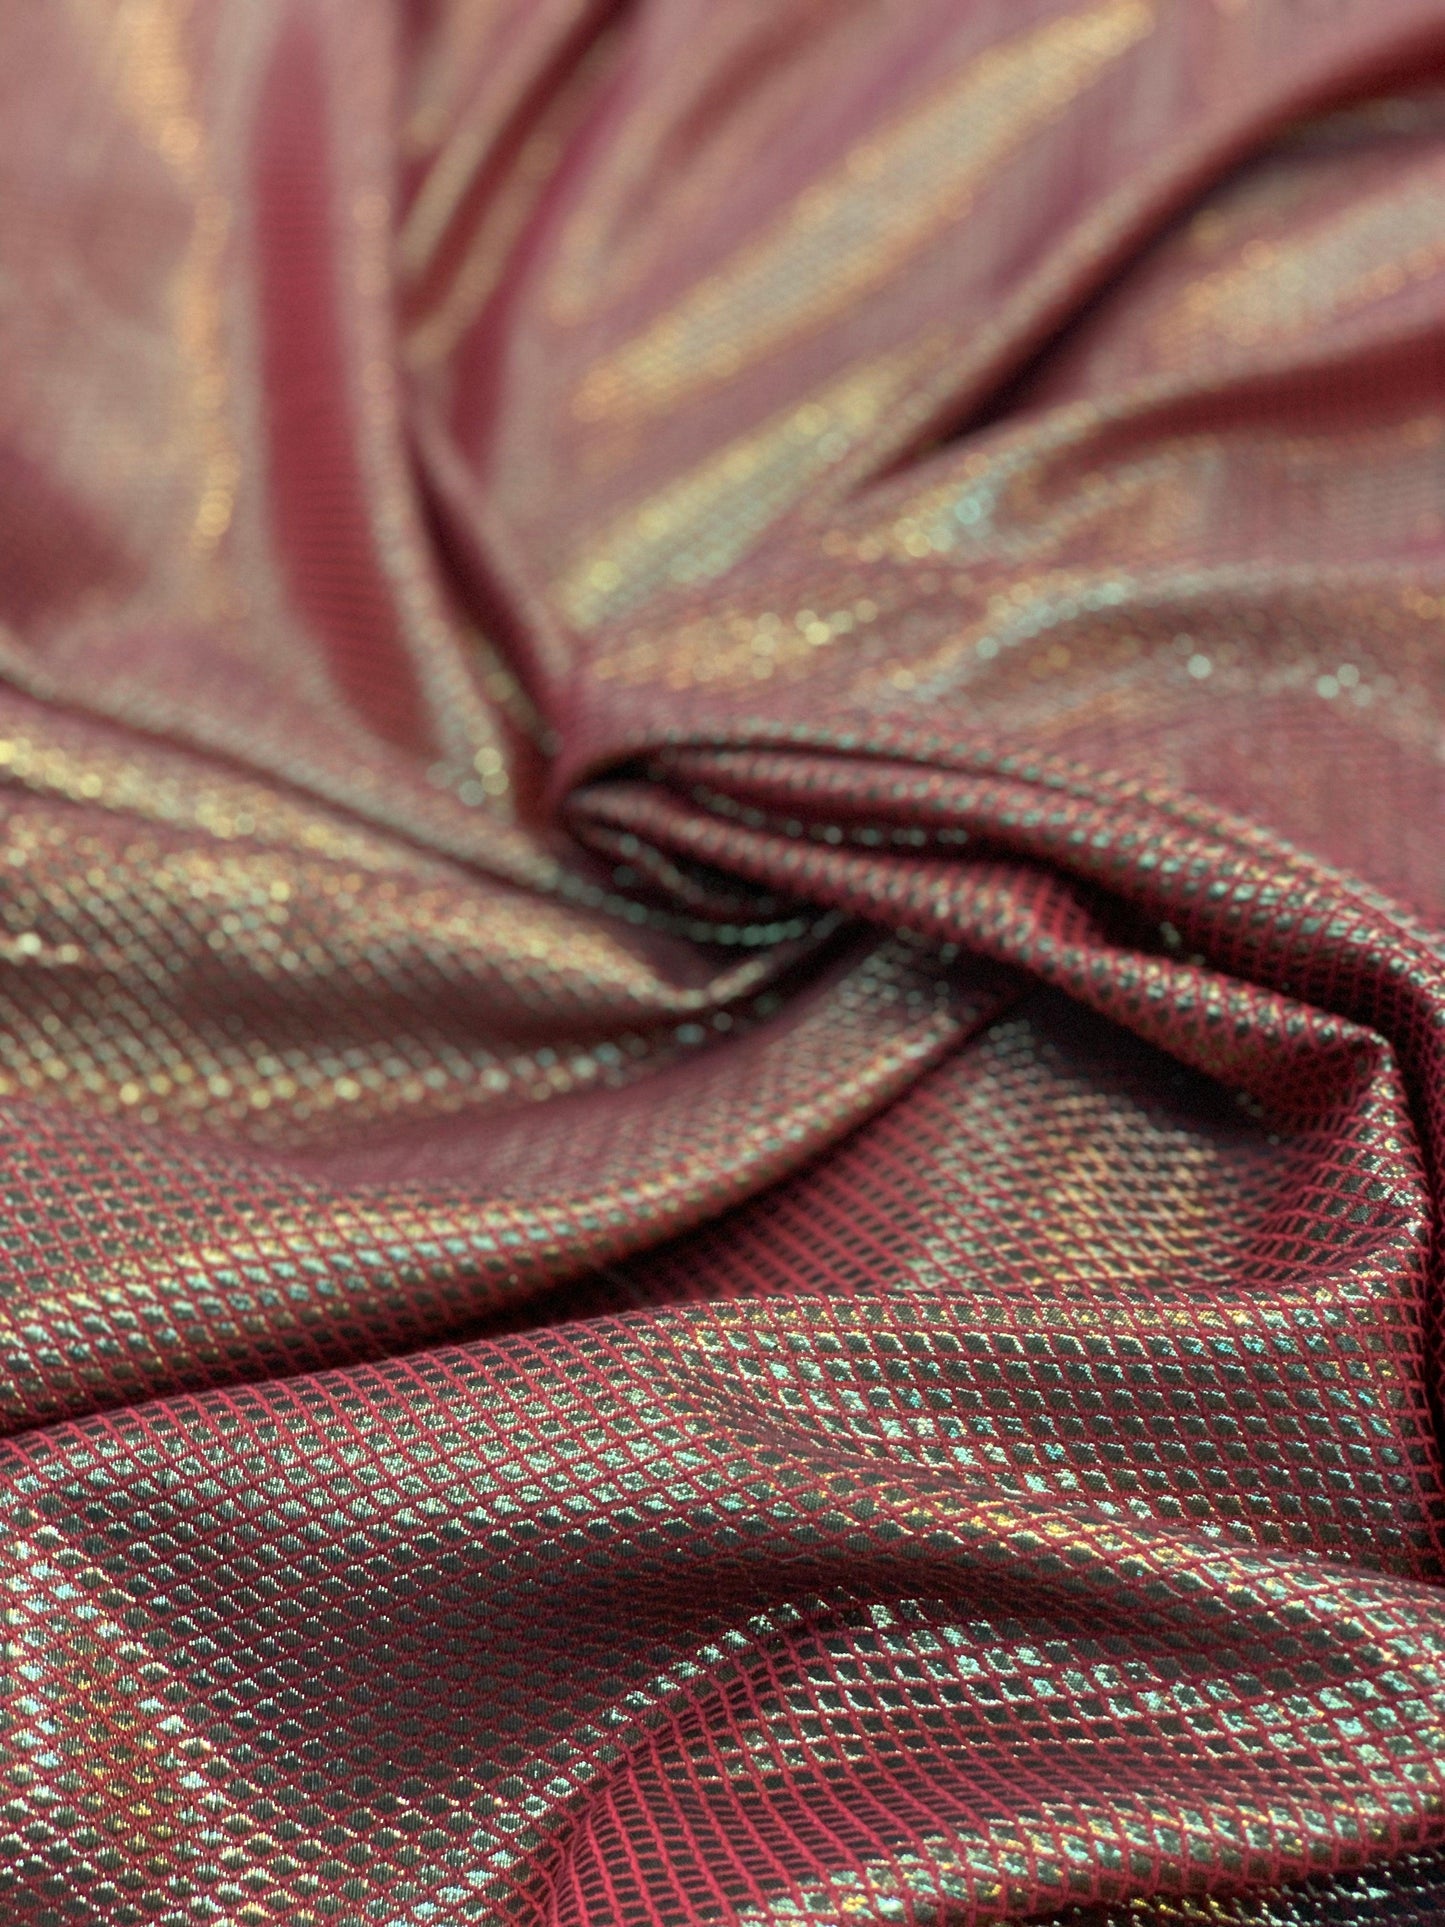 Metallic Red Dope Dyed Yarn Brocade - Prime Fabrics